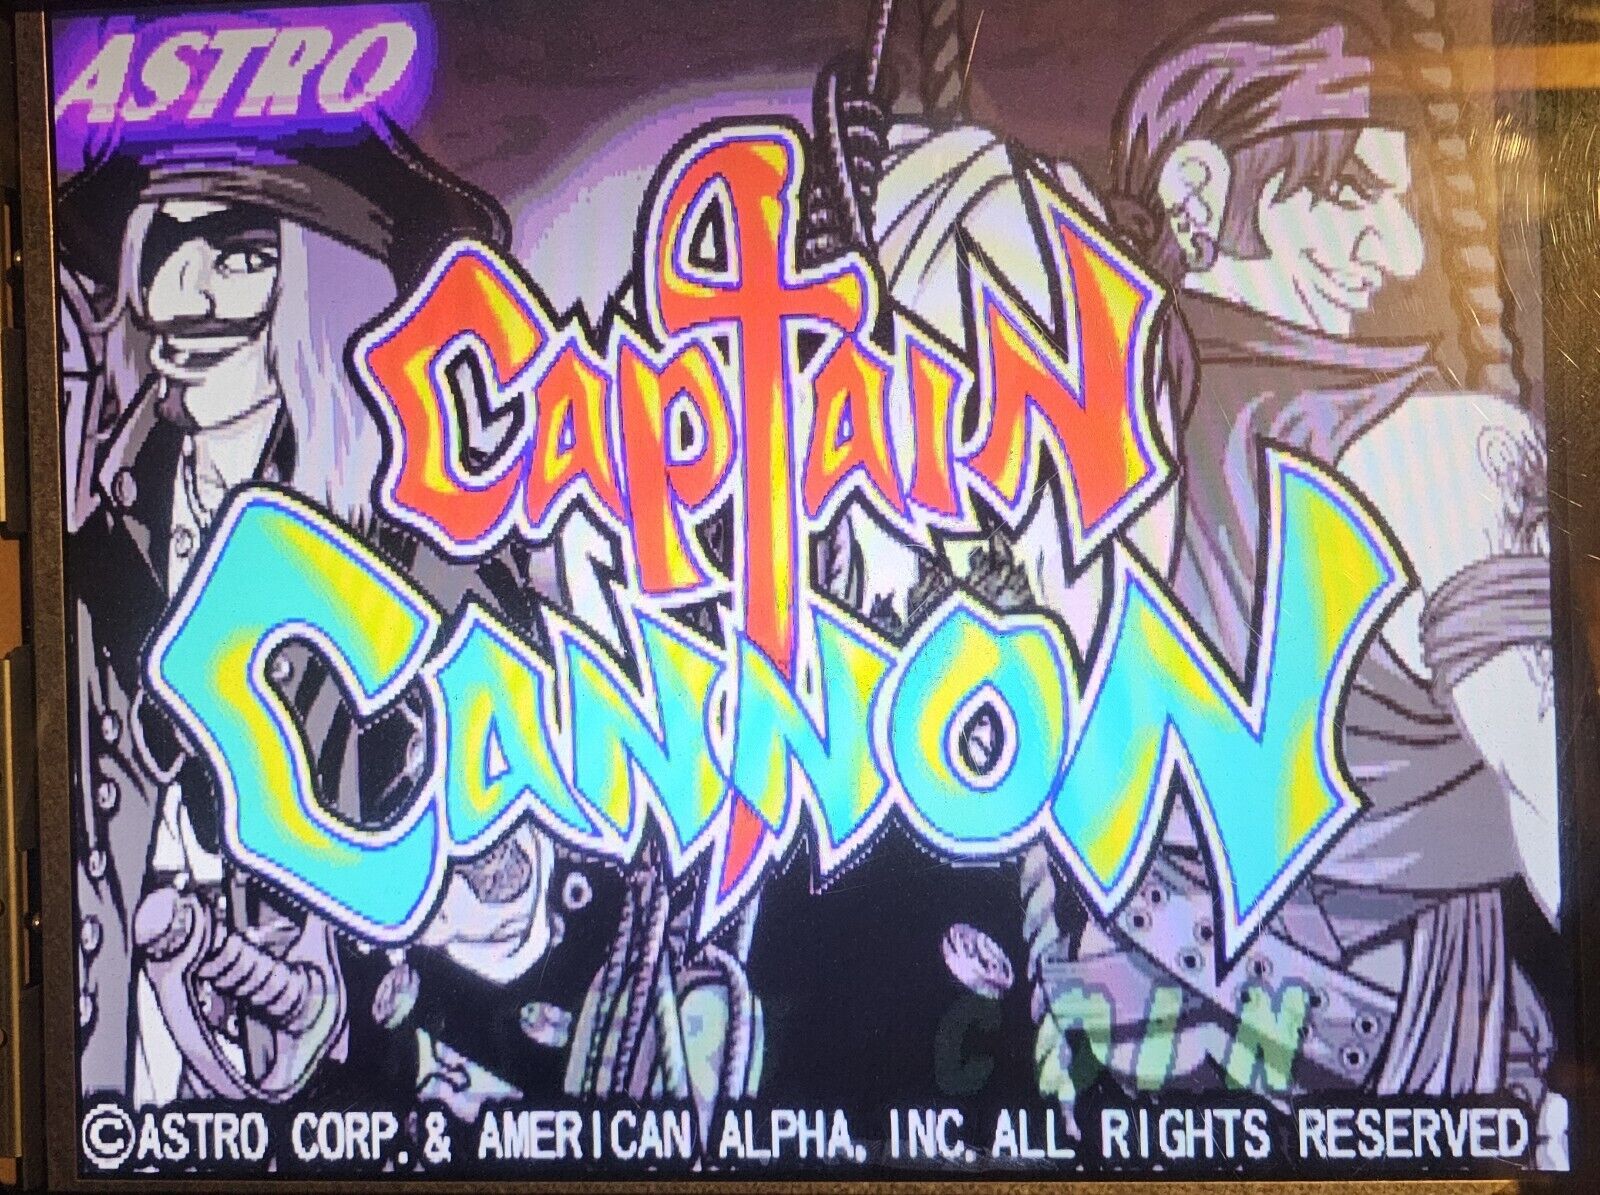 🔥🔥IGS Captain Cannon 25 Liner Arcade Game Circuit Board🔥🔥